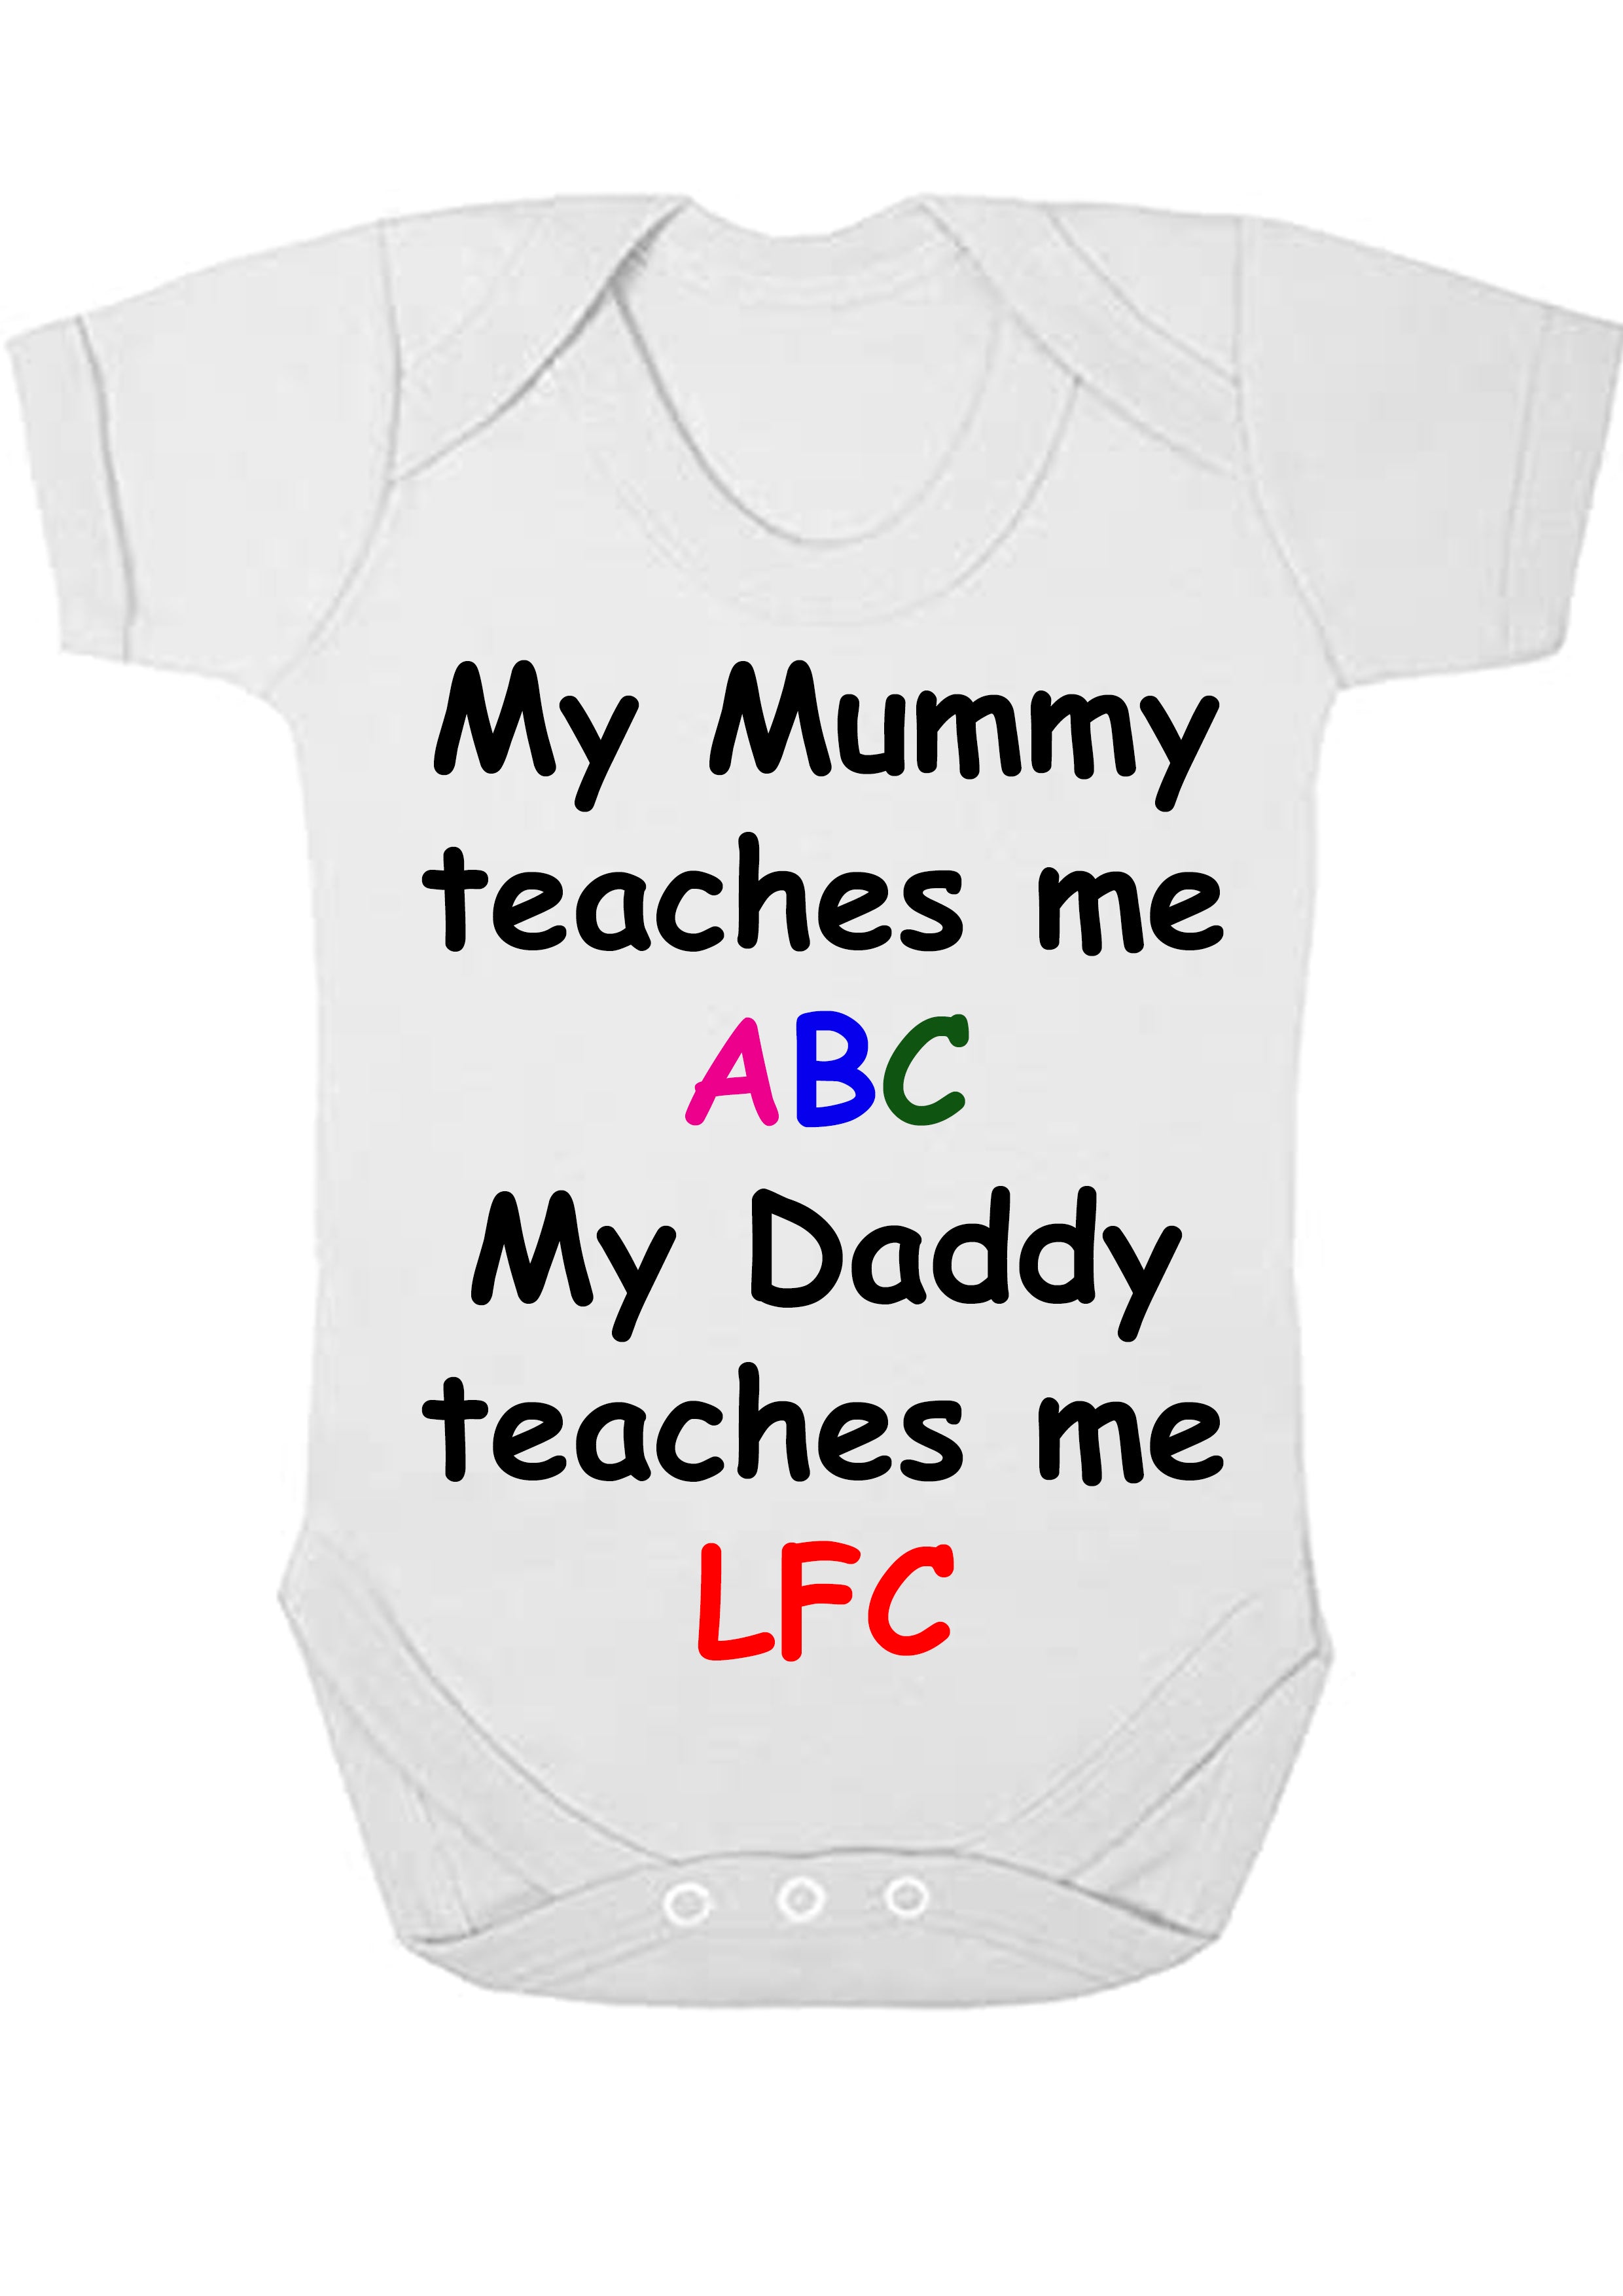 My Mum teaches me ABC and my daddy teaches me LFC